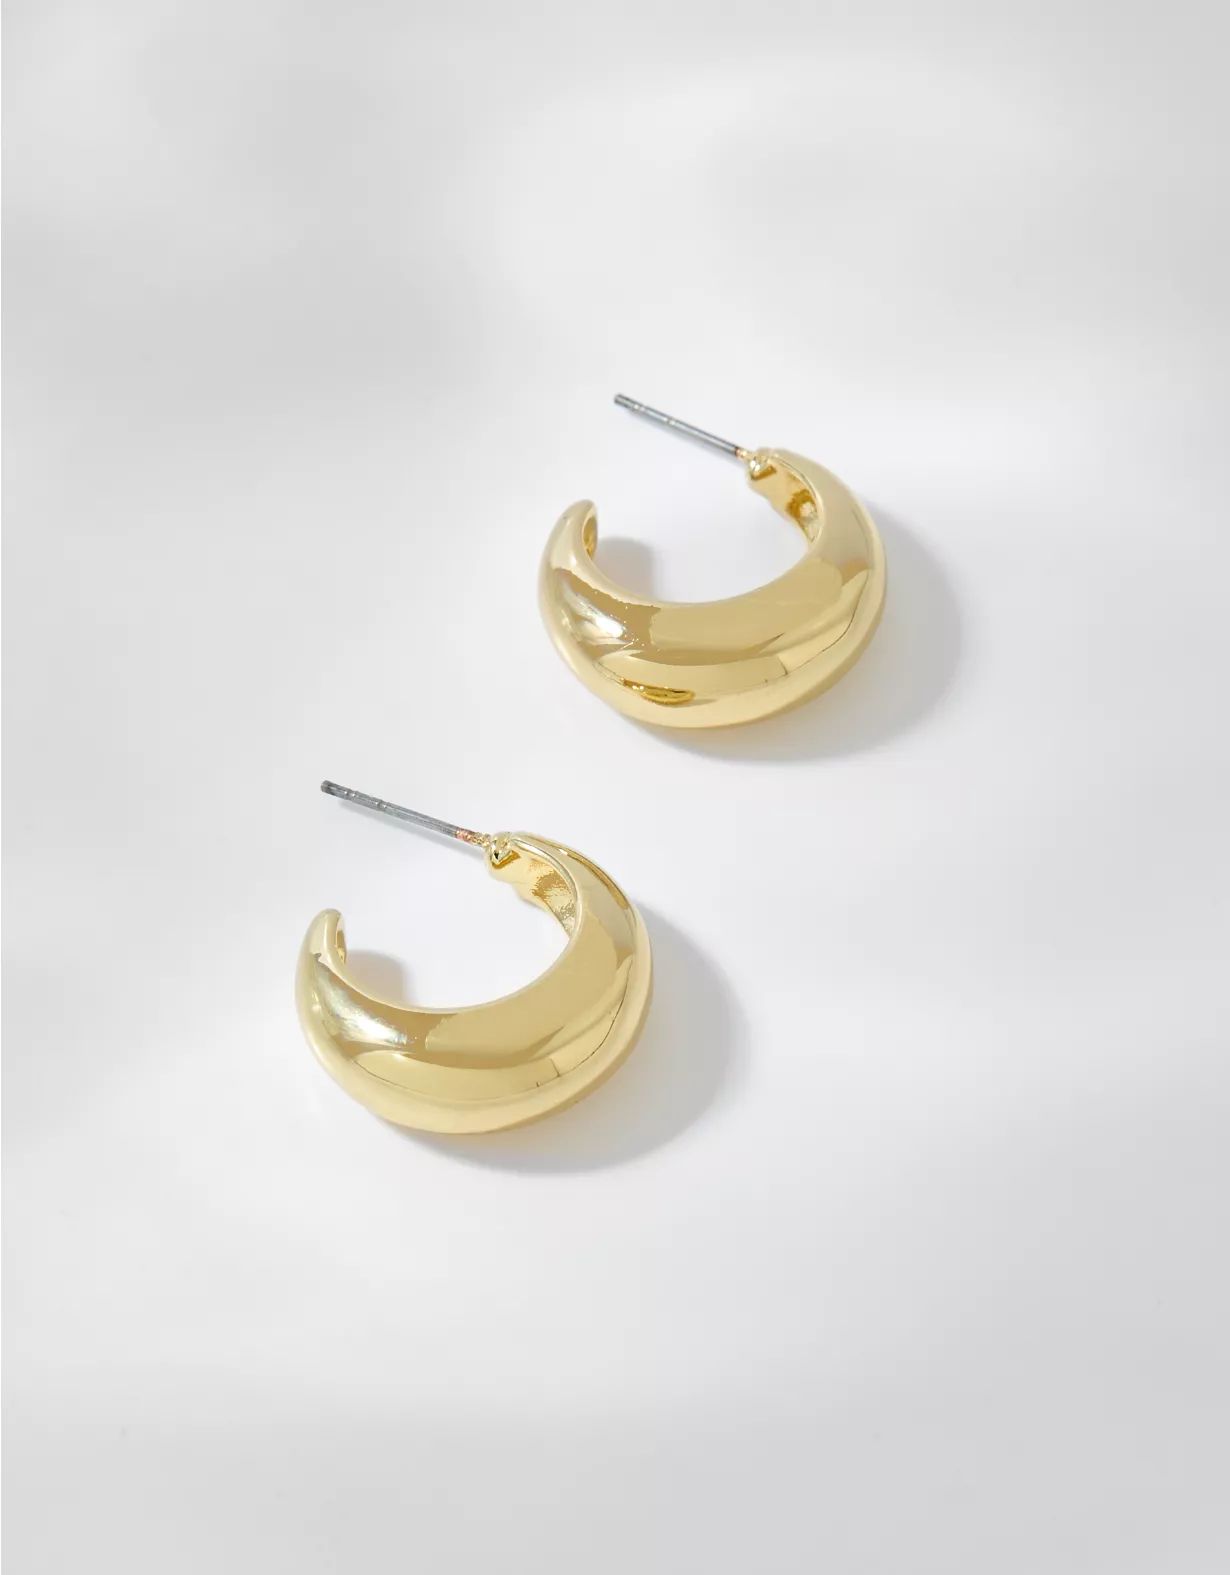 Aerie Shiny Gold Hoop Earrings | Aerie